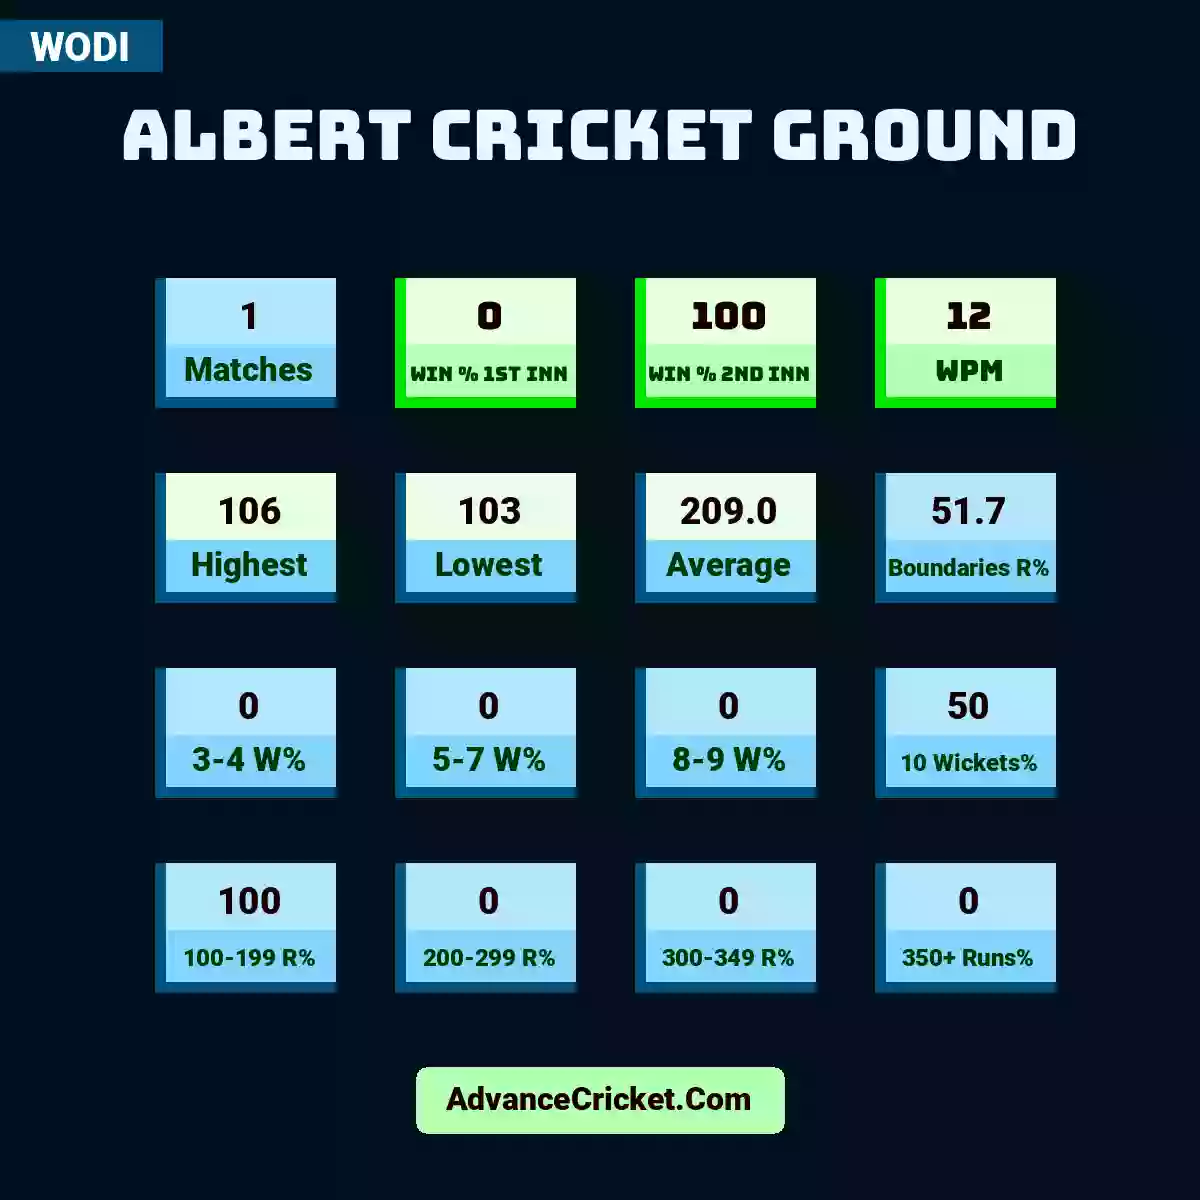 Image showing Albert Cricket Ground with Matches: 1, Win % 1st Inn: 0, Win % 2nd Inn: 100, WPM: 12, Highest: 106, Lowest: 103, Average: 209.0, Boundaries R%: 51.7, 3-4 W%: 0, 5-7 W%: 0, 8-9 W%: 0, 10 Wickets%: 50, 100-199 R%: 100, 200-299 R%: 0, 300-349 R%: 0, 350+ Runs%: 0.